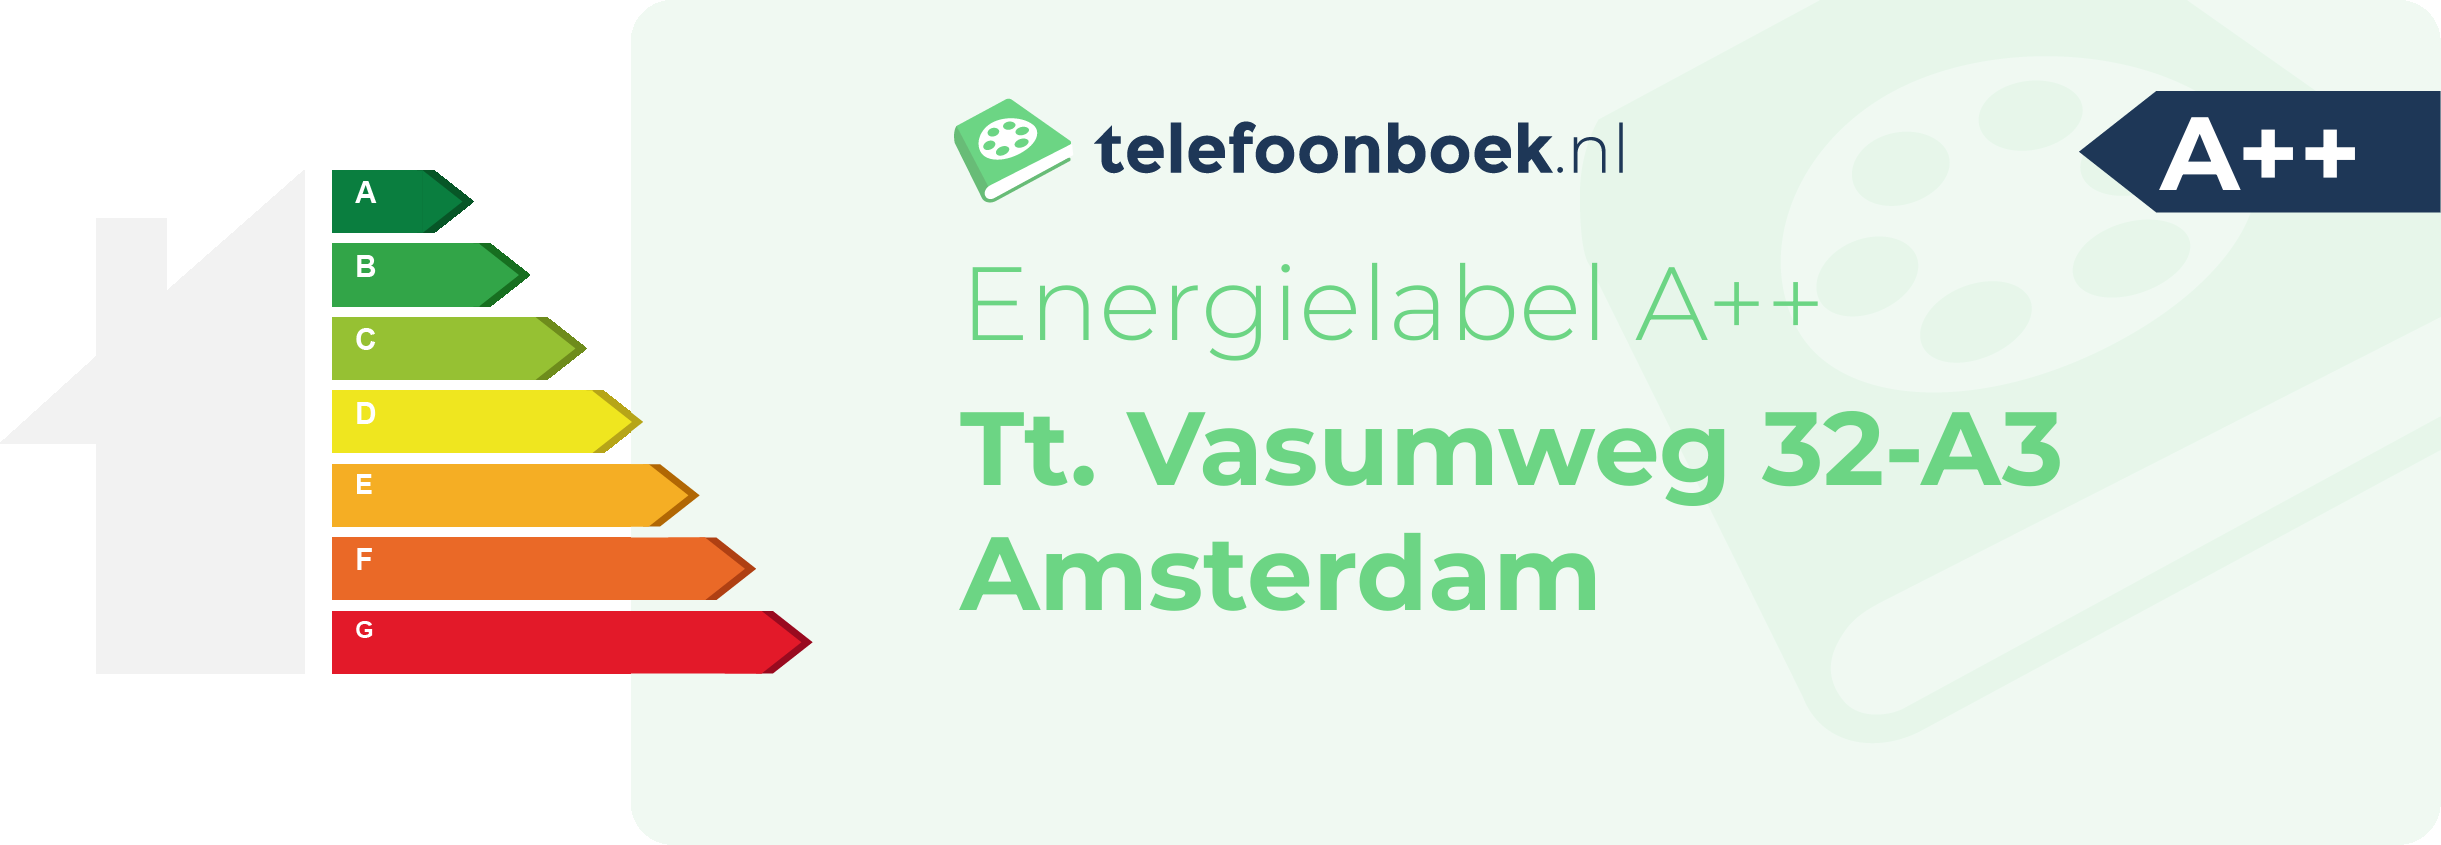 Energielabel Tt. Vasumweg 32-A3 Amsterdam